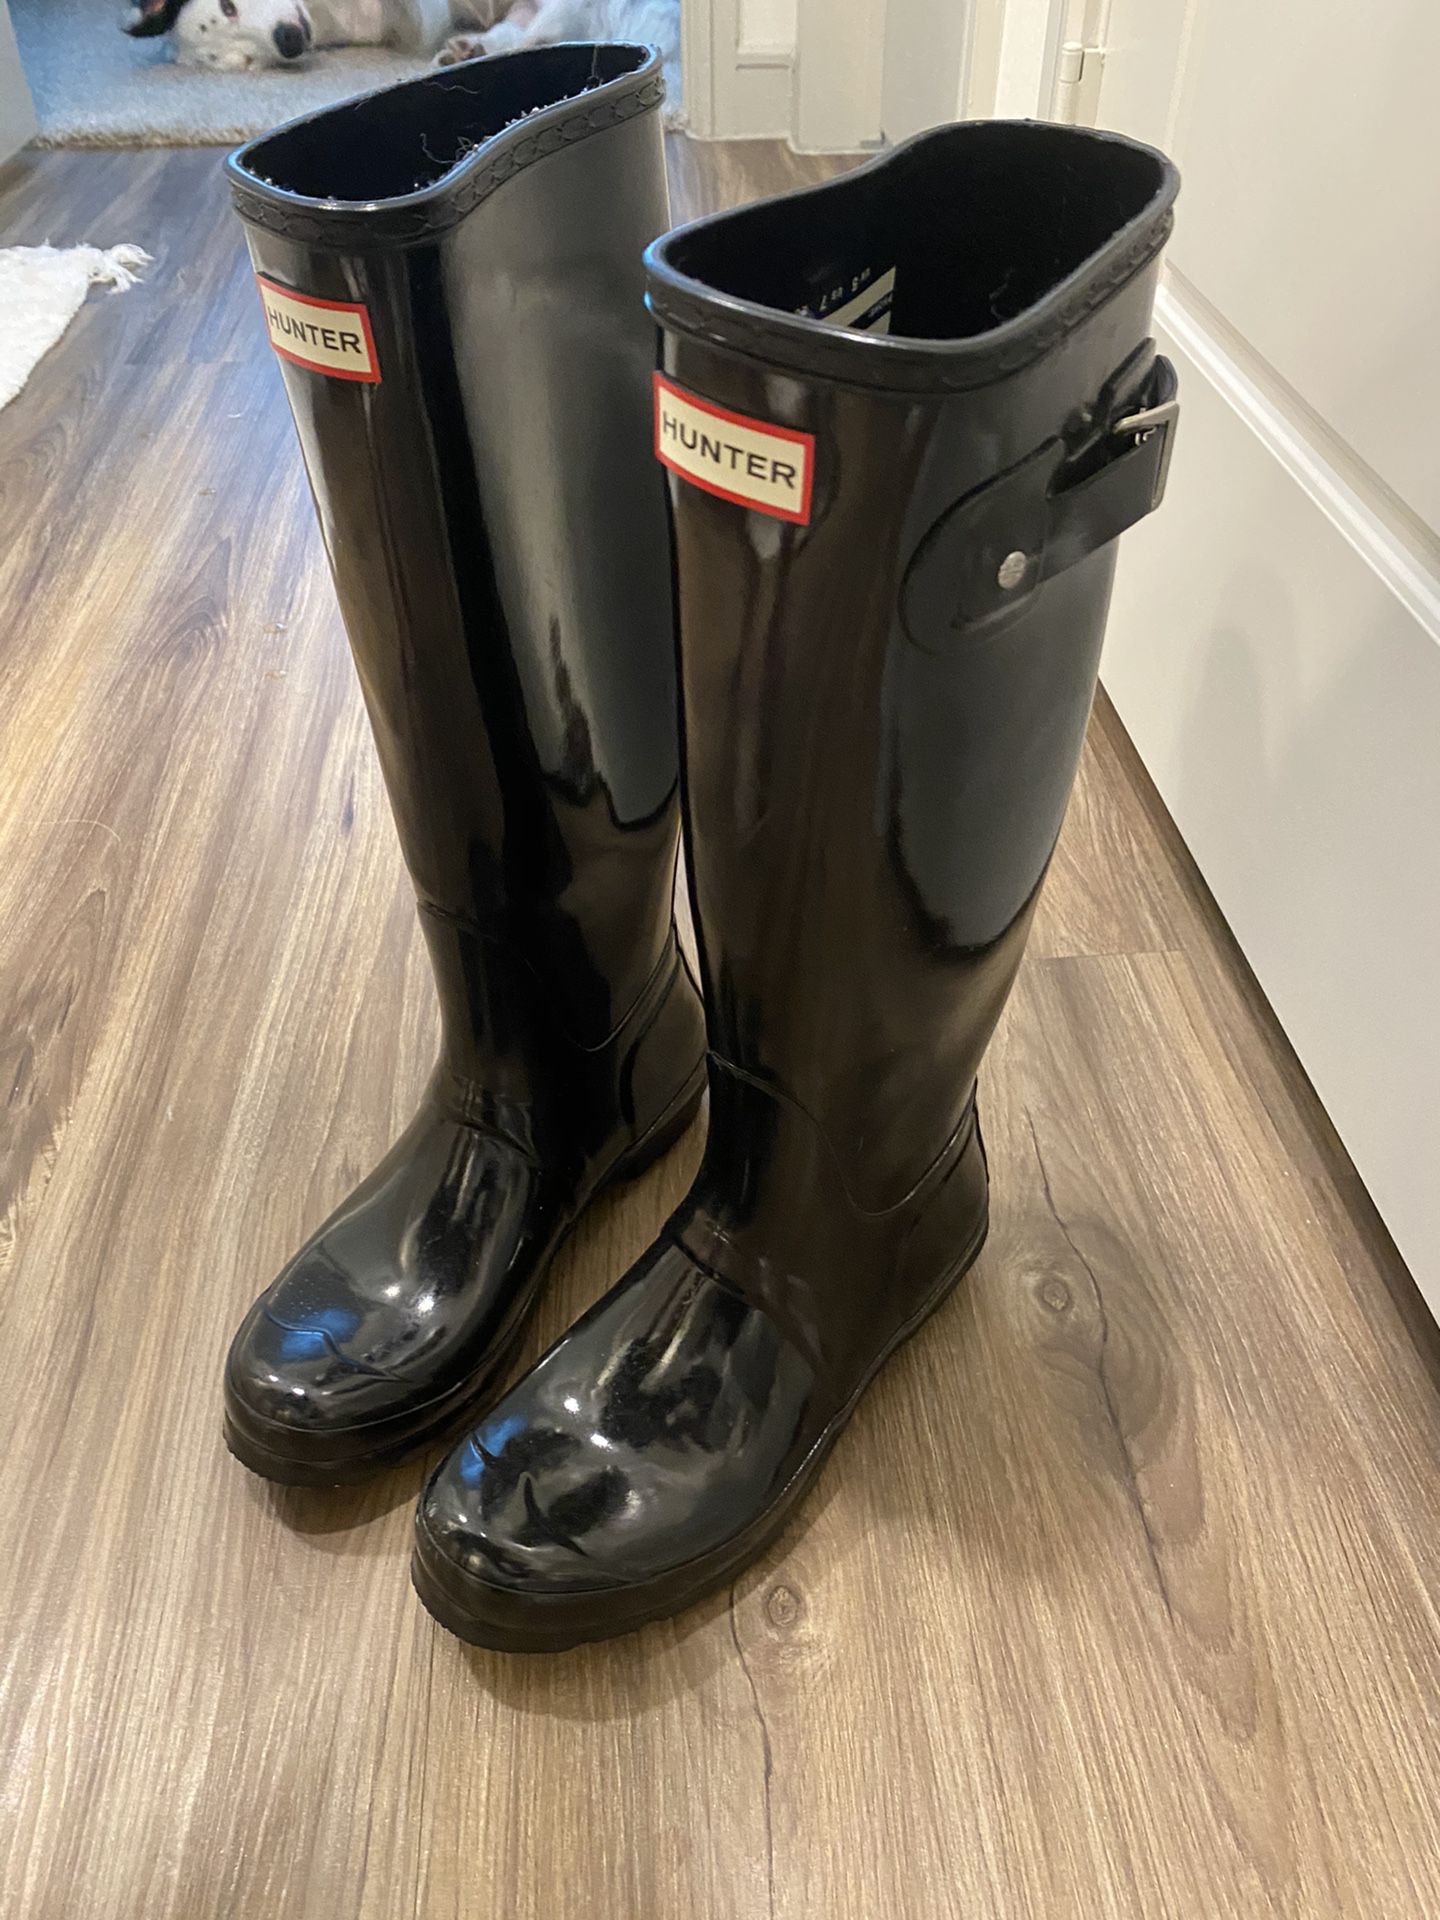 Hunter Rain Boots - women’s size 7, black